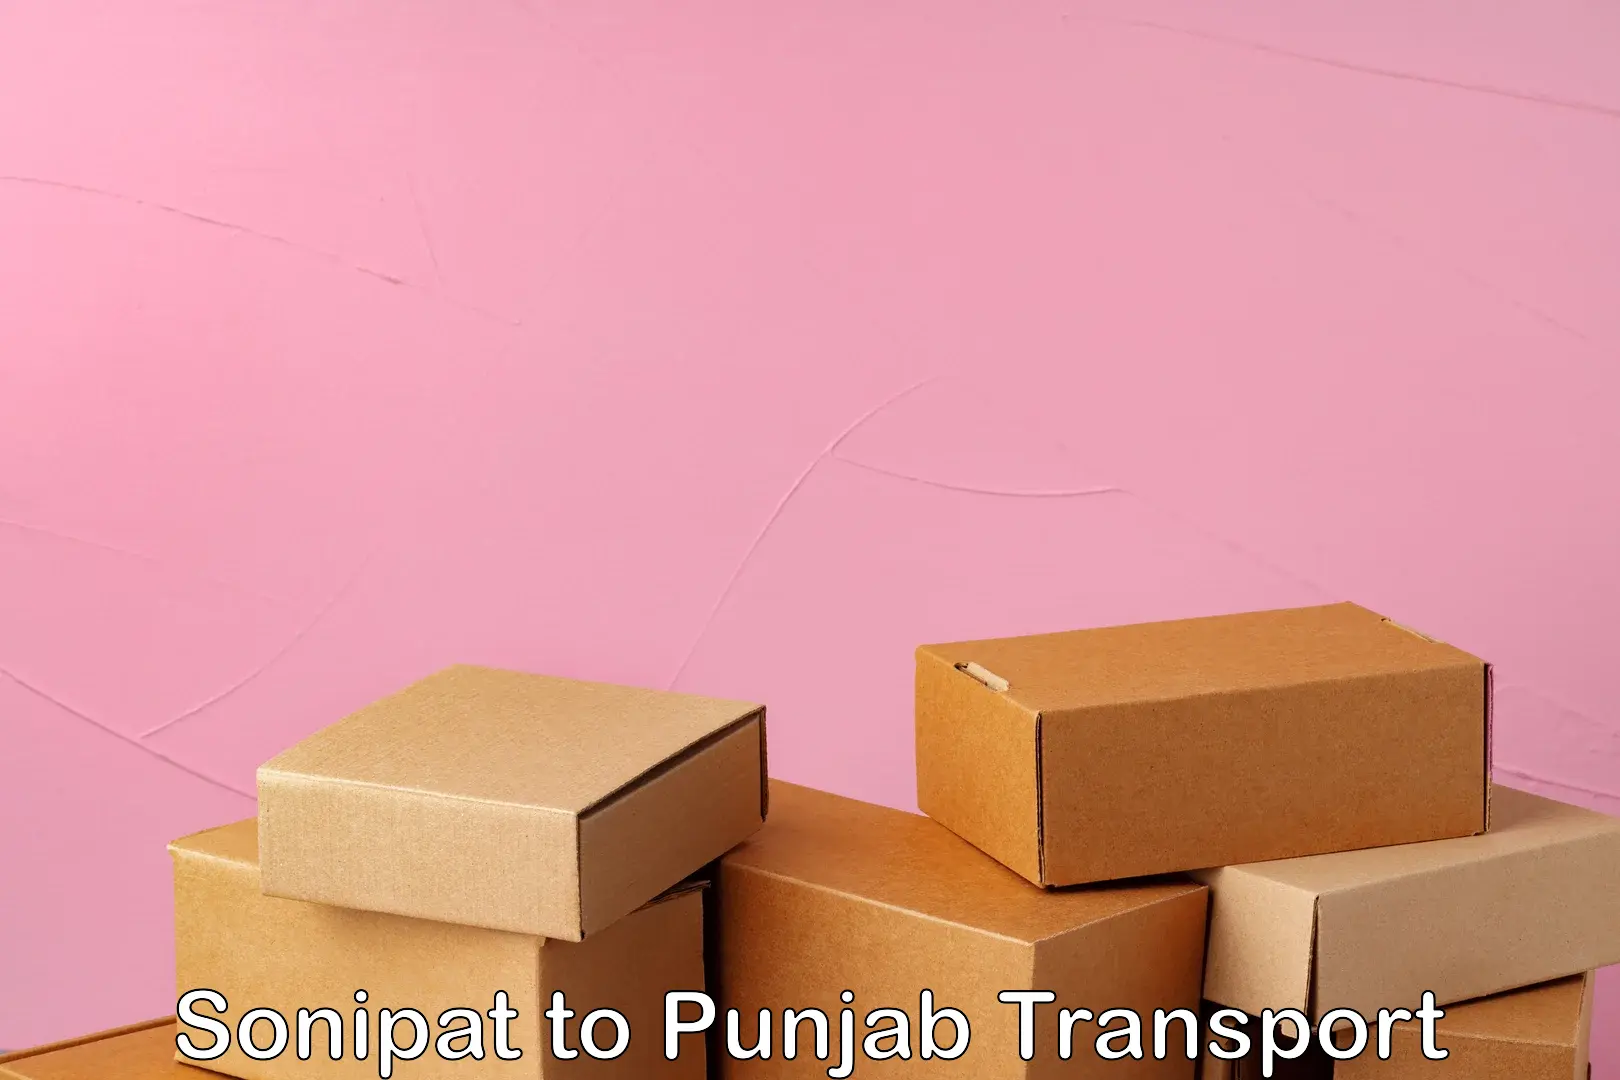 Sending bike to another city Sonipat to Punjab